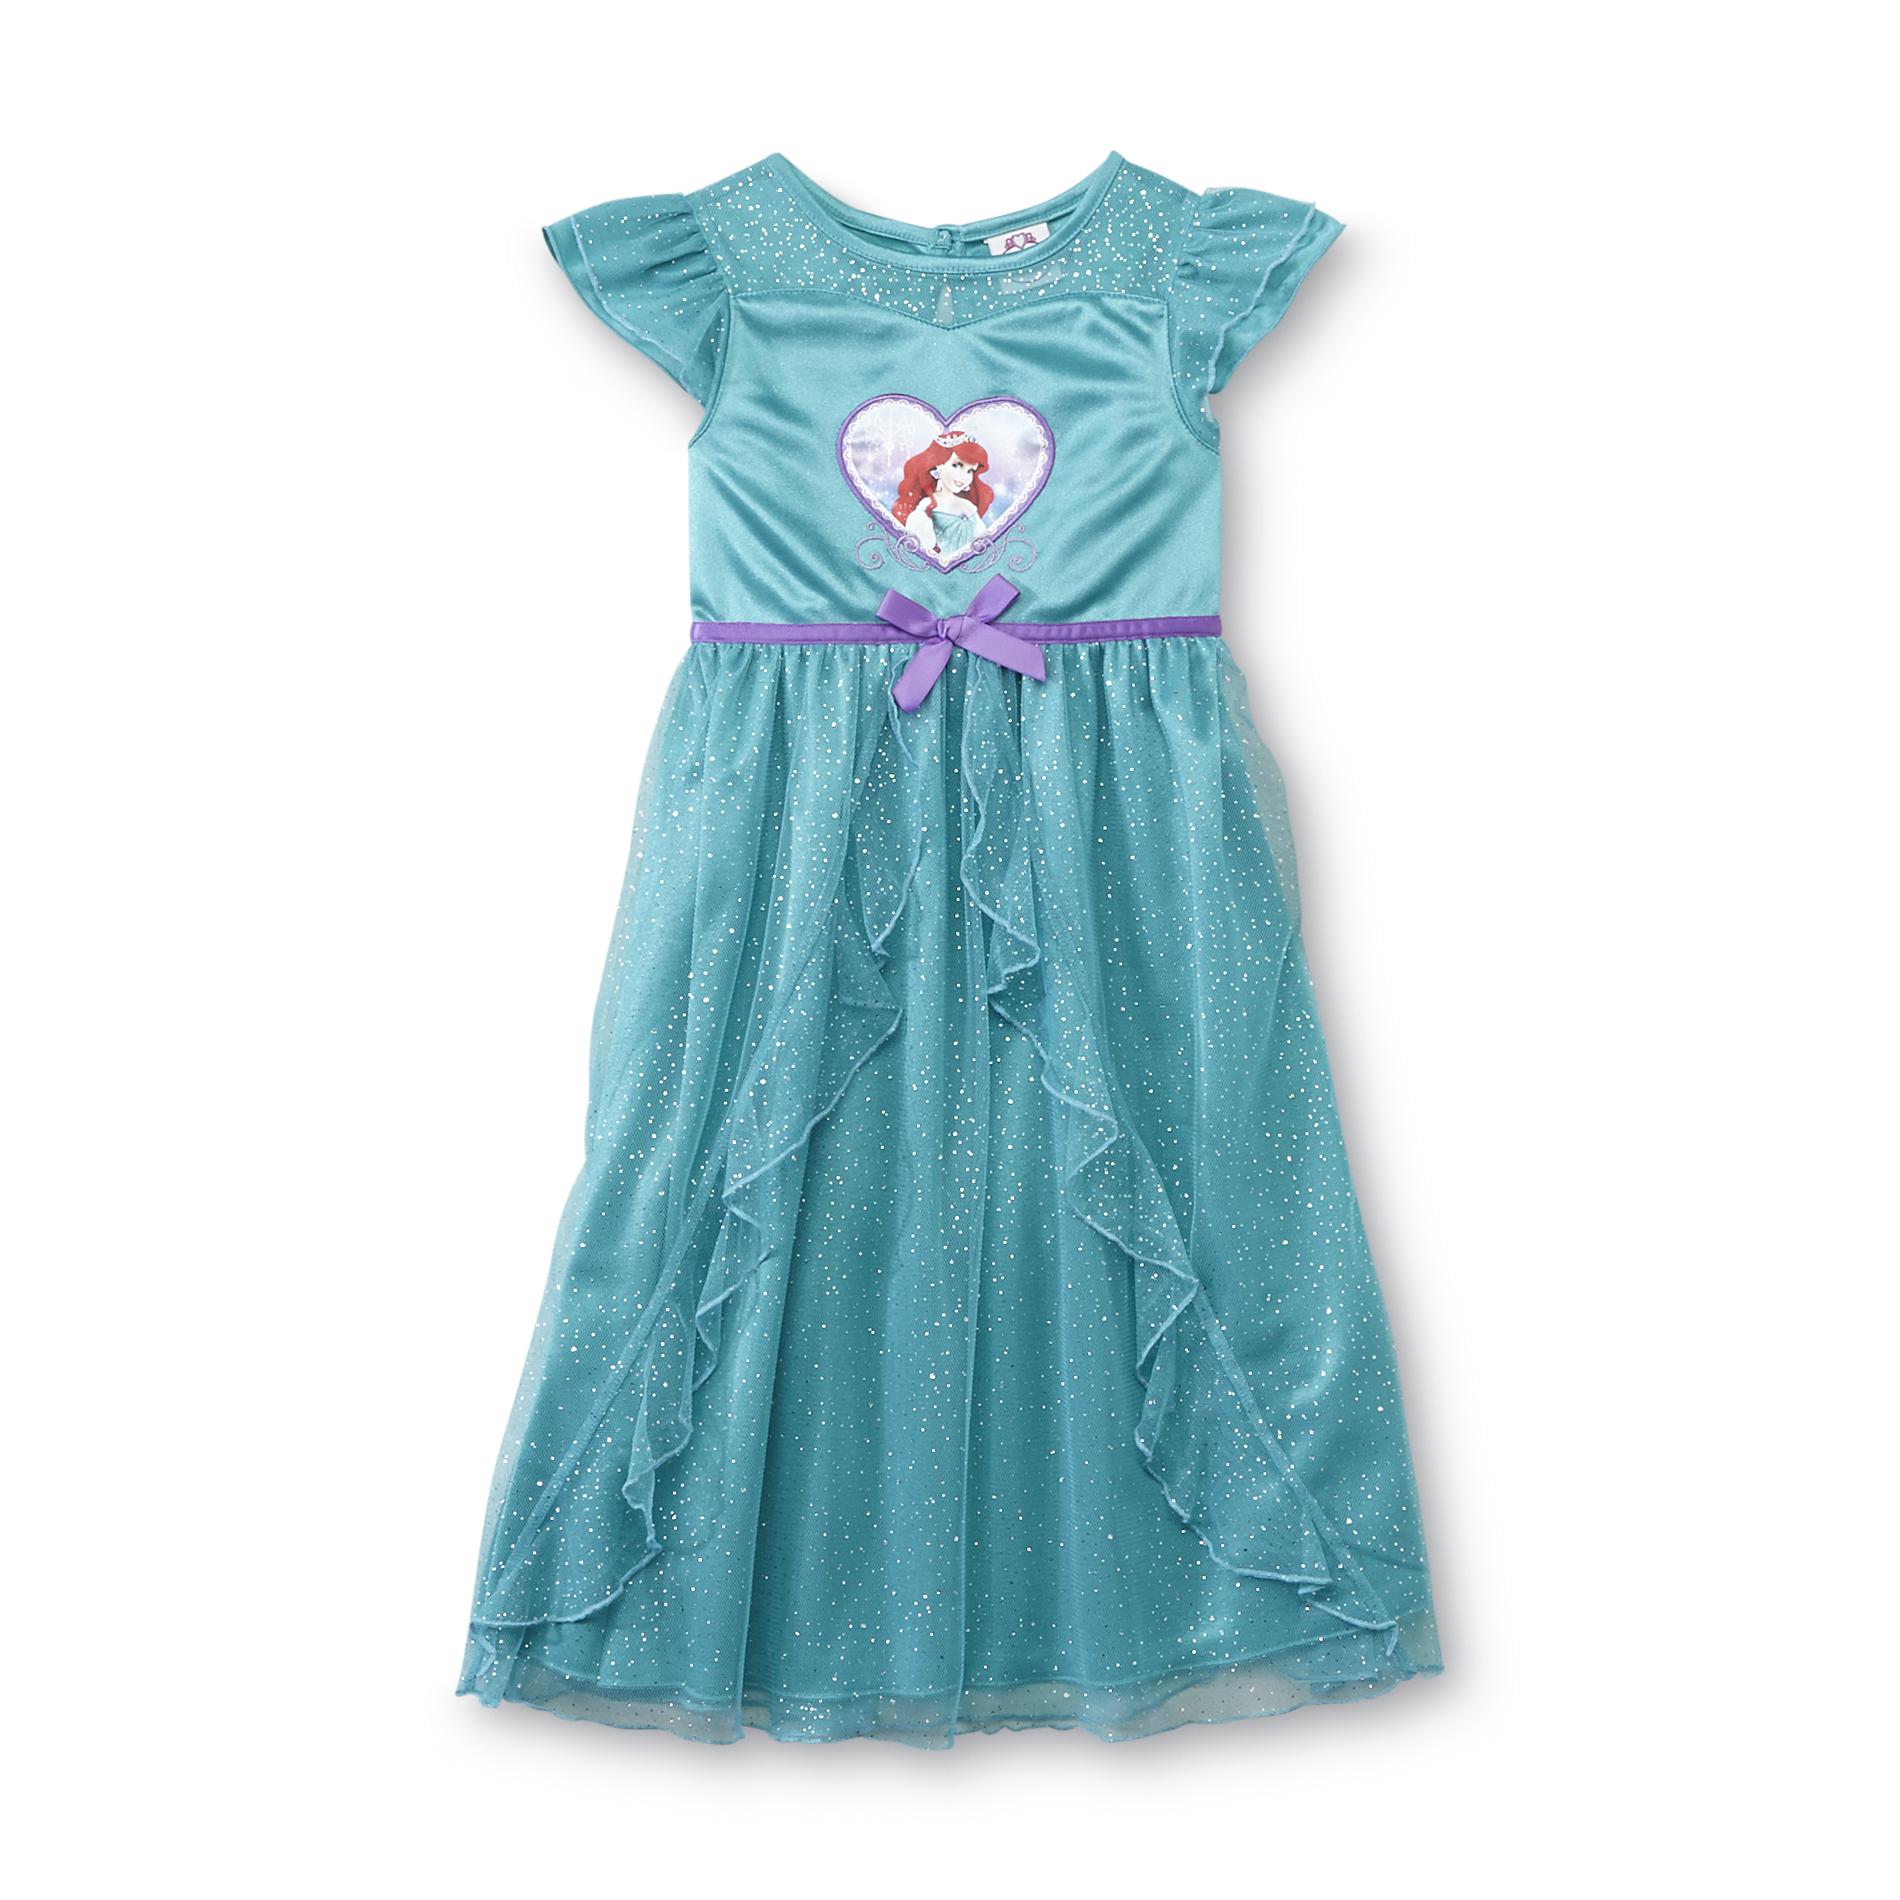 Disney Princess Toddler Girl's Nightgown - The Little Mermaid